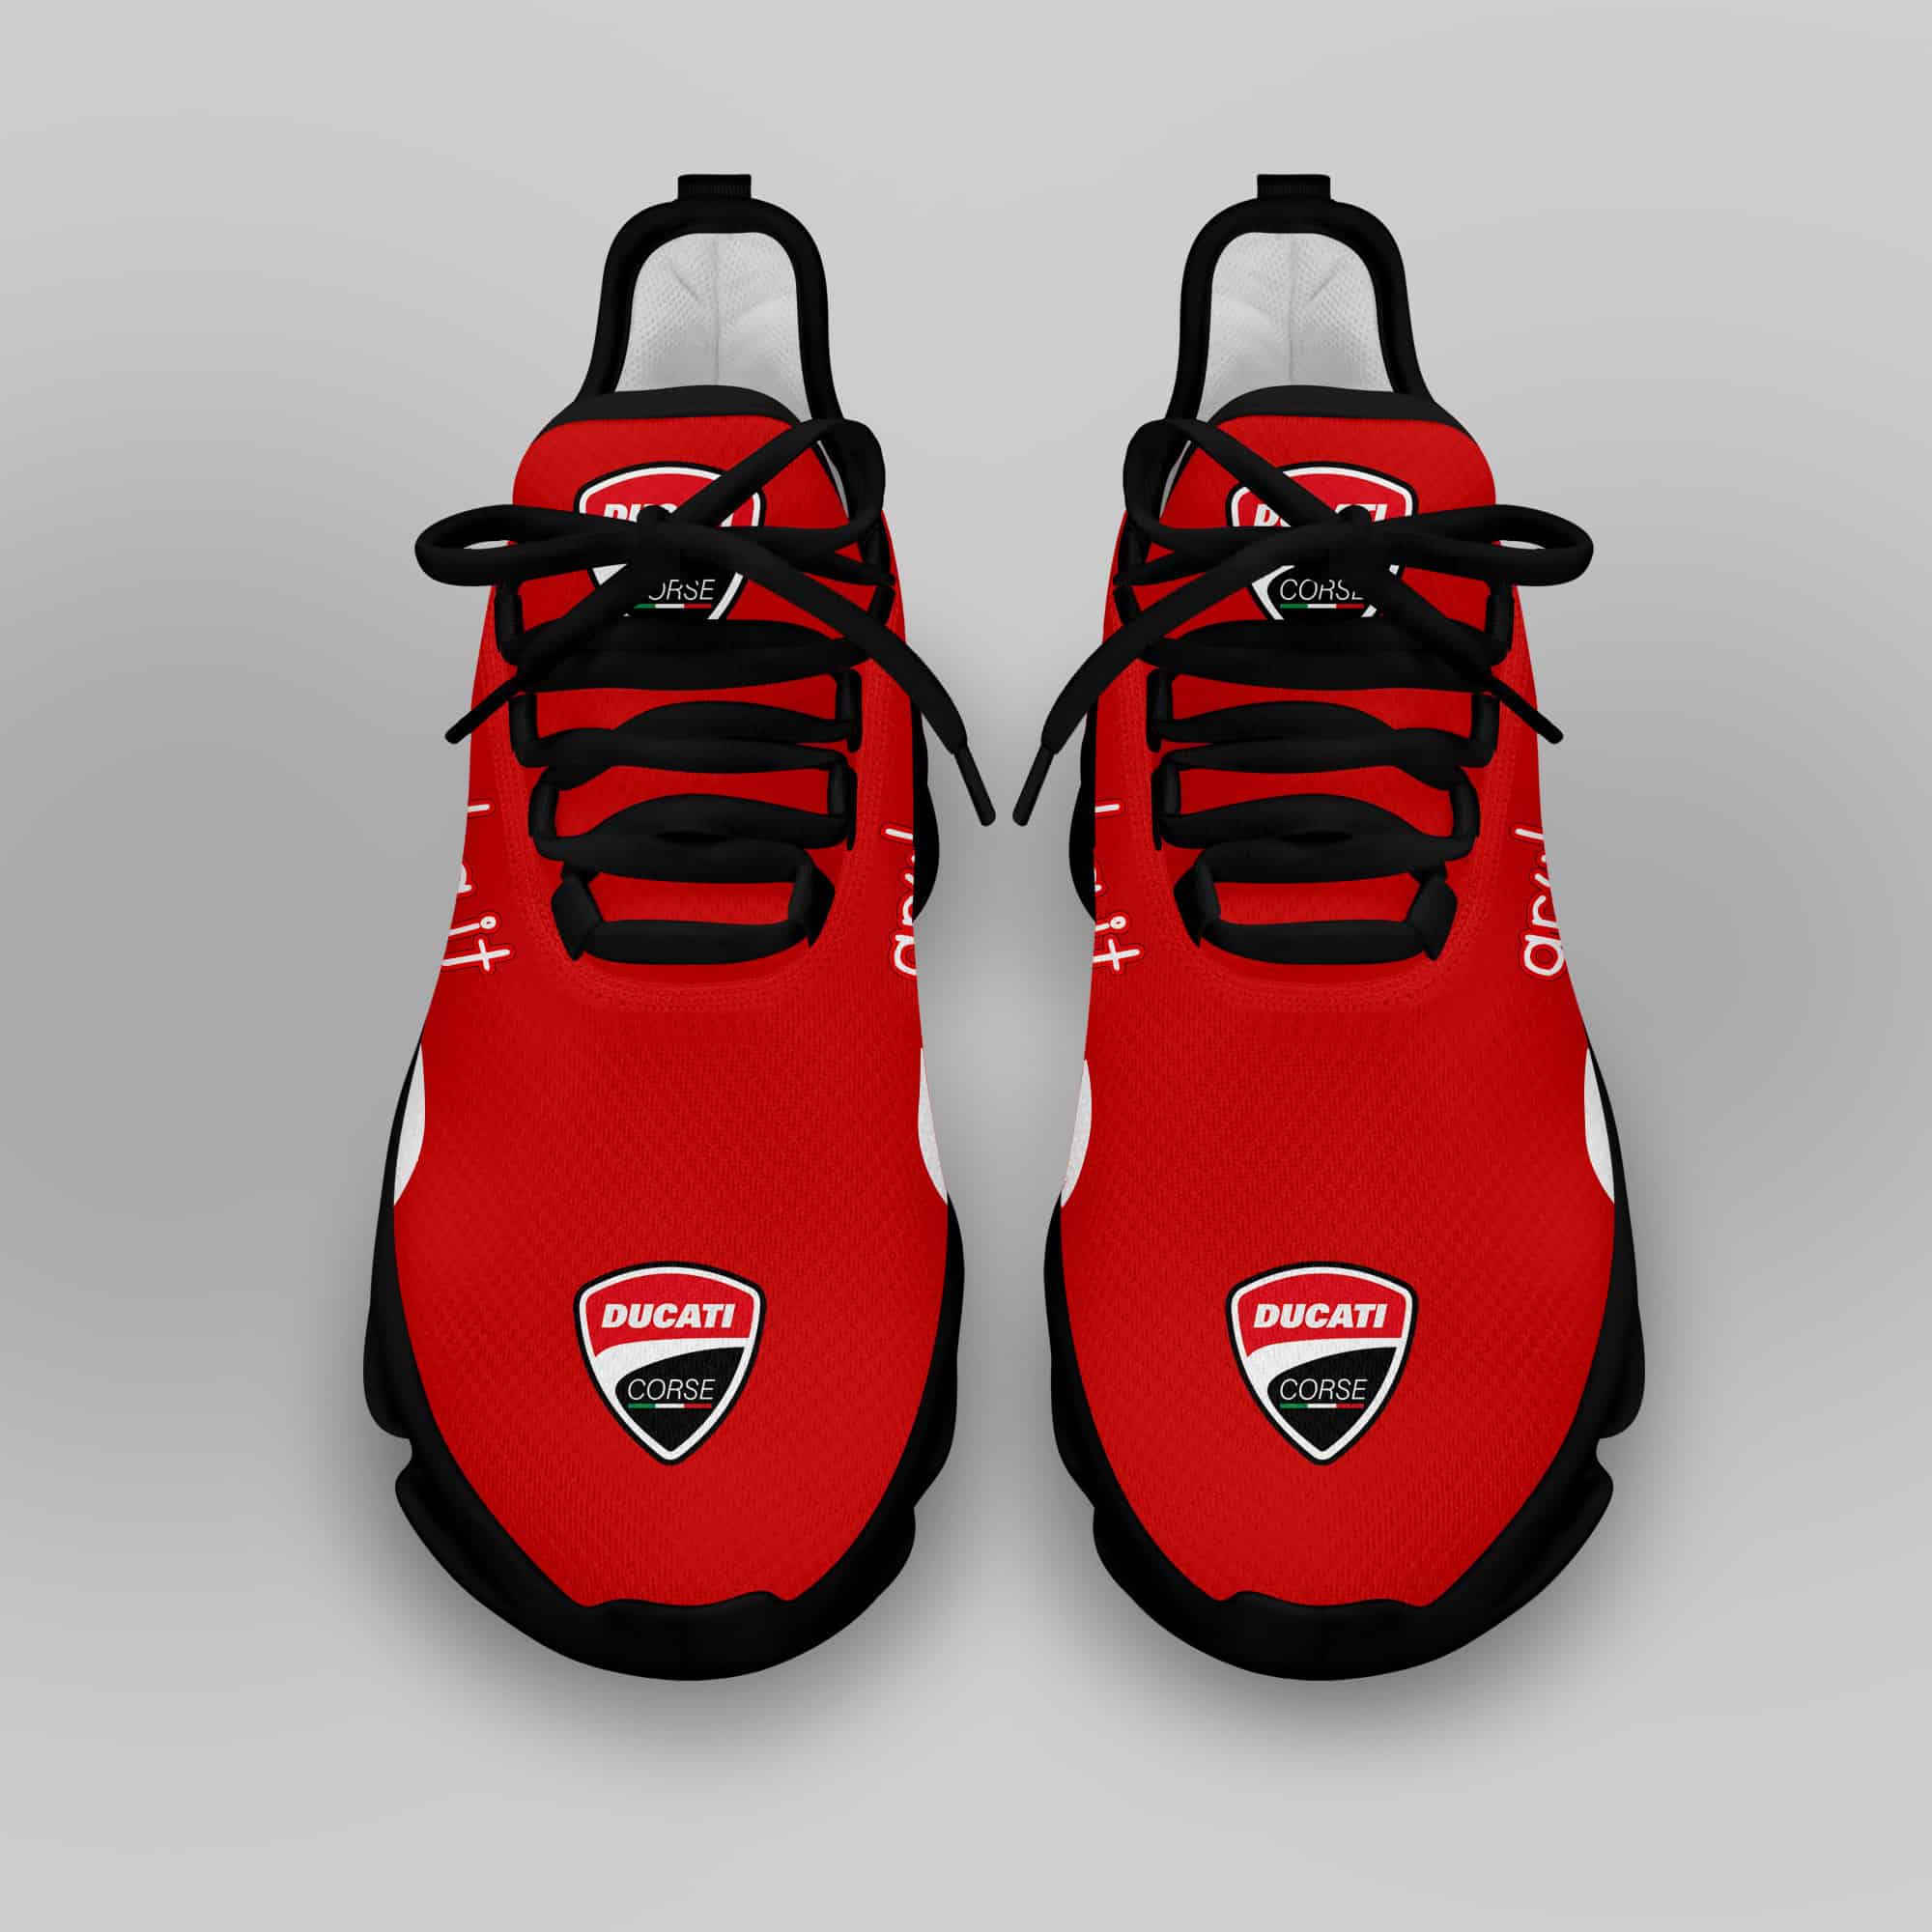 Ducati Racing Running Shoes Max Soul Shoes Sneakers Ver 21 4